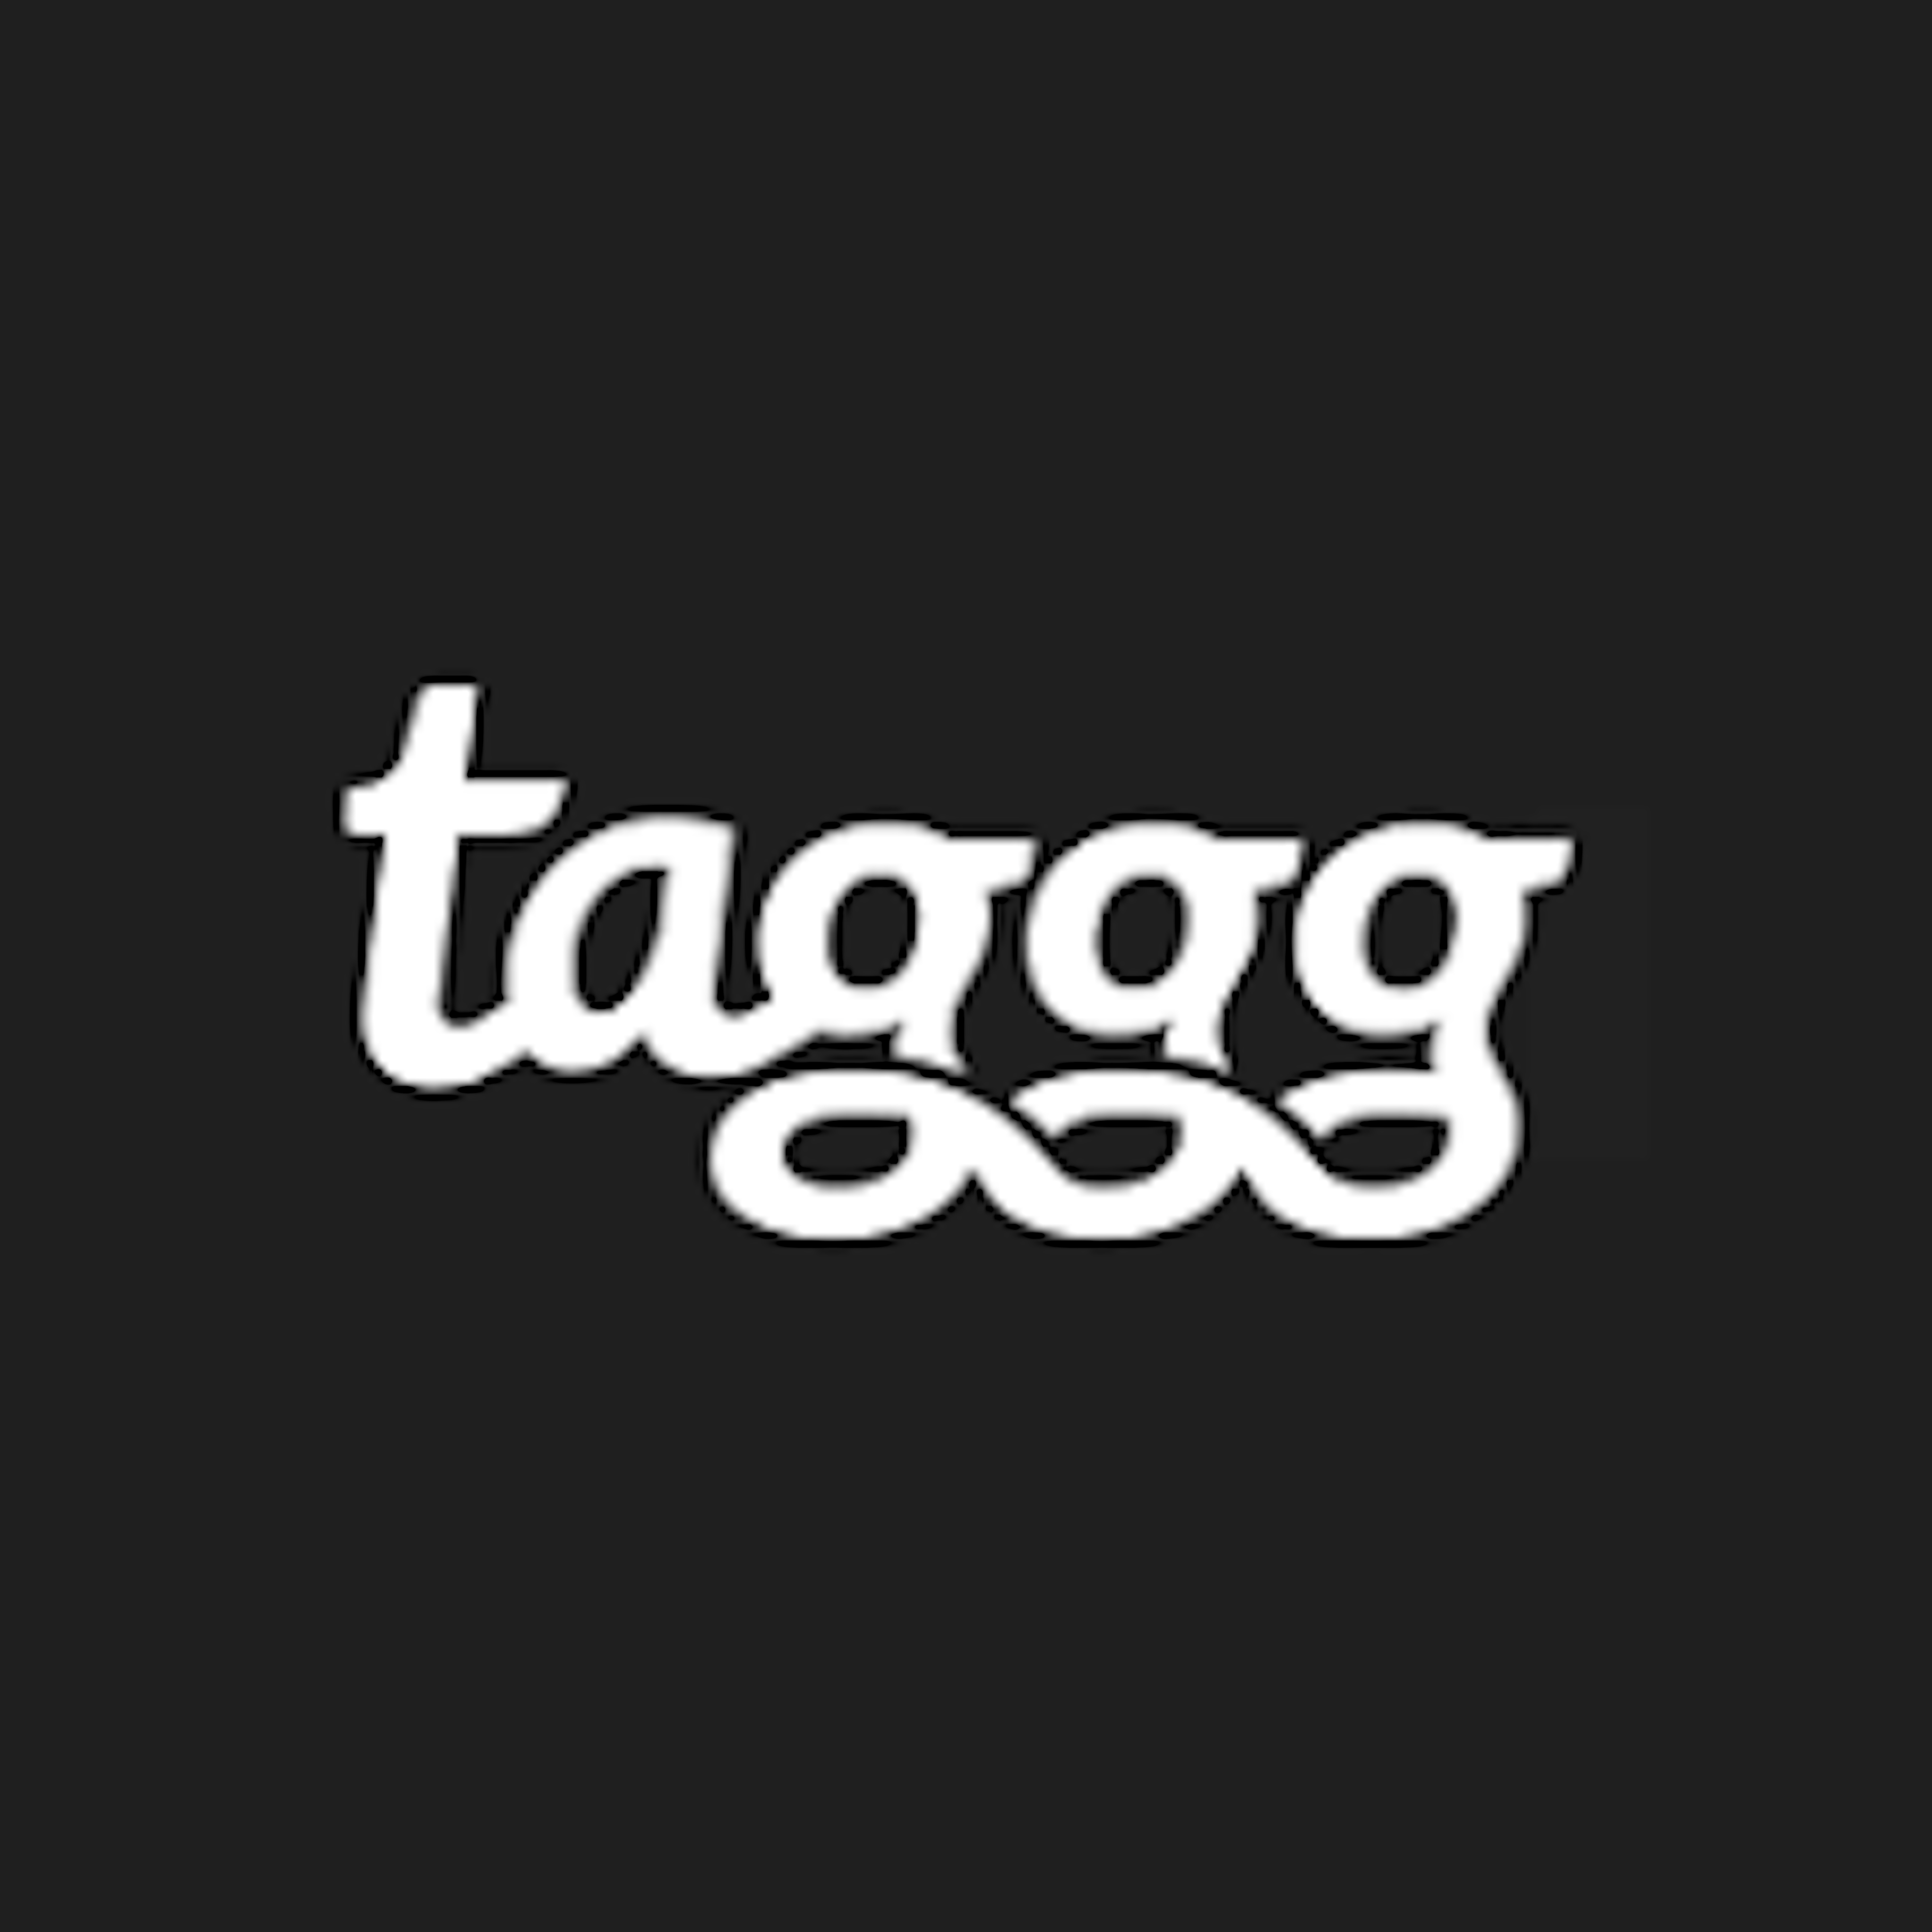 Taggg Logo